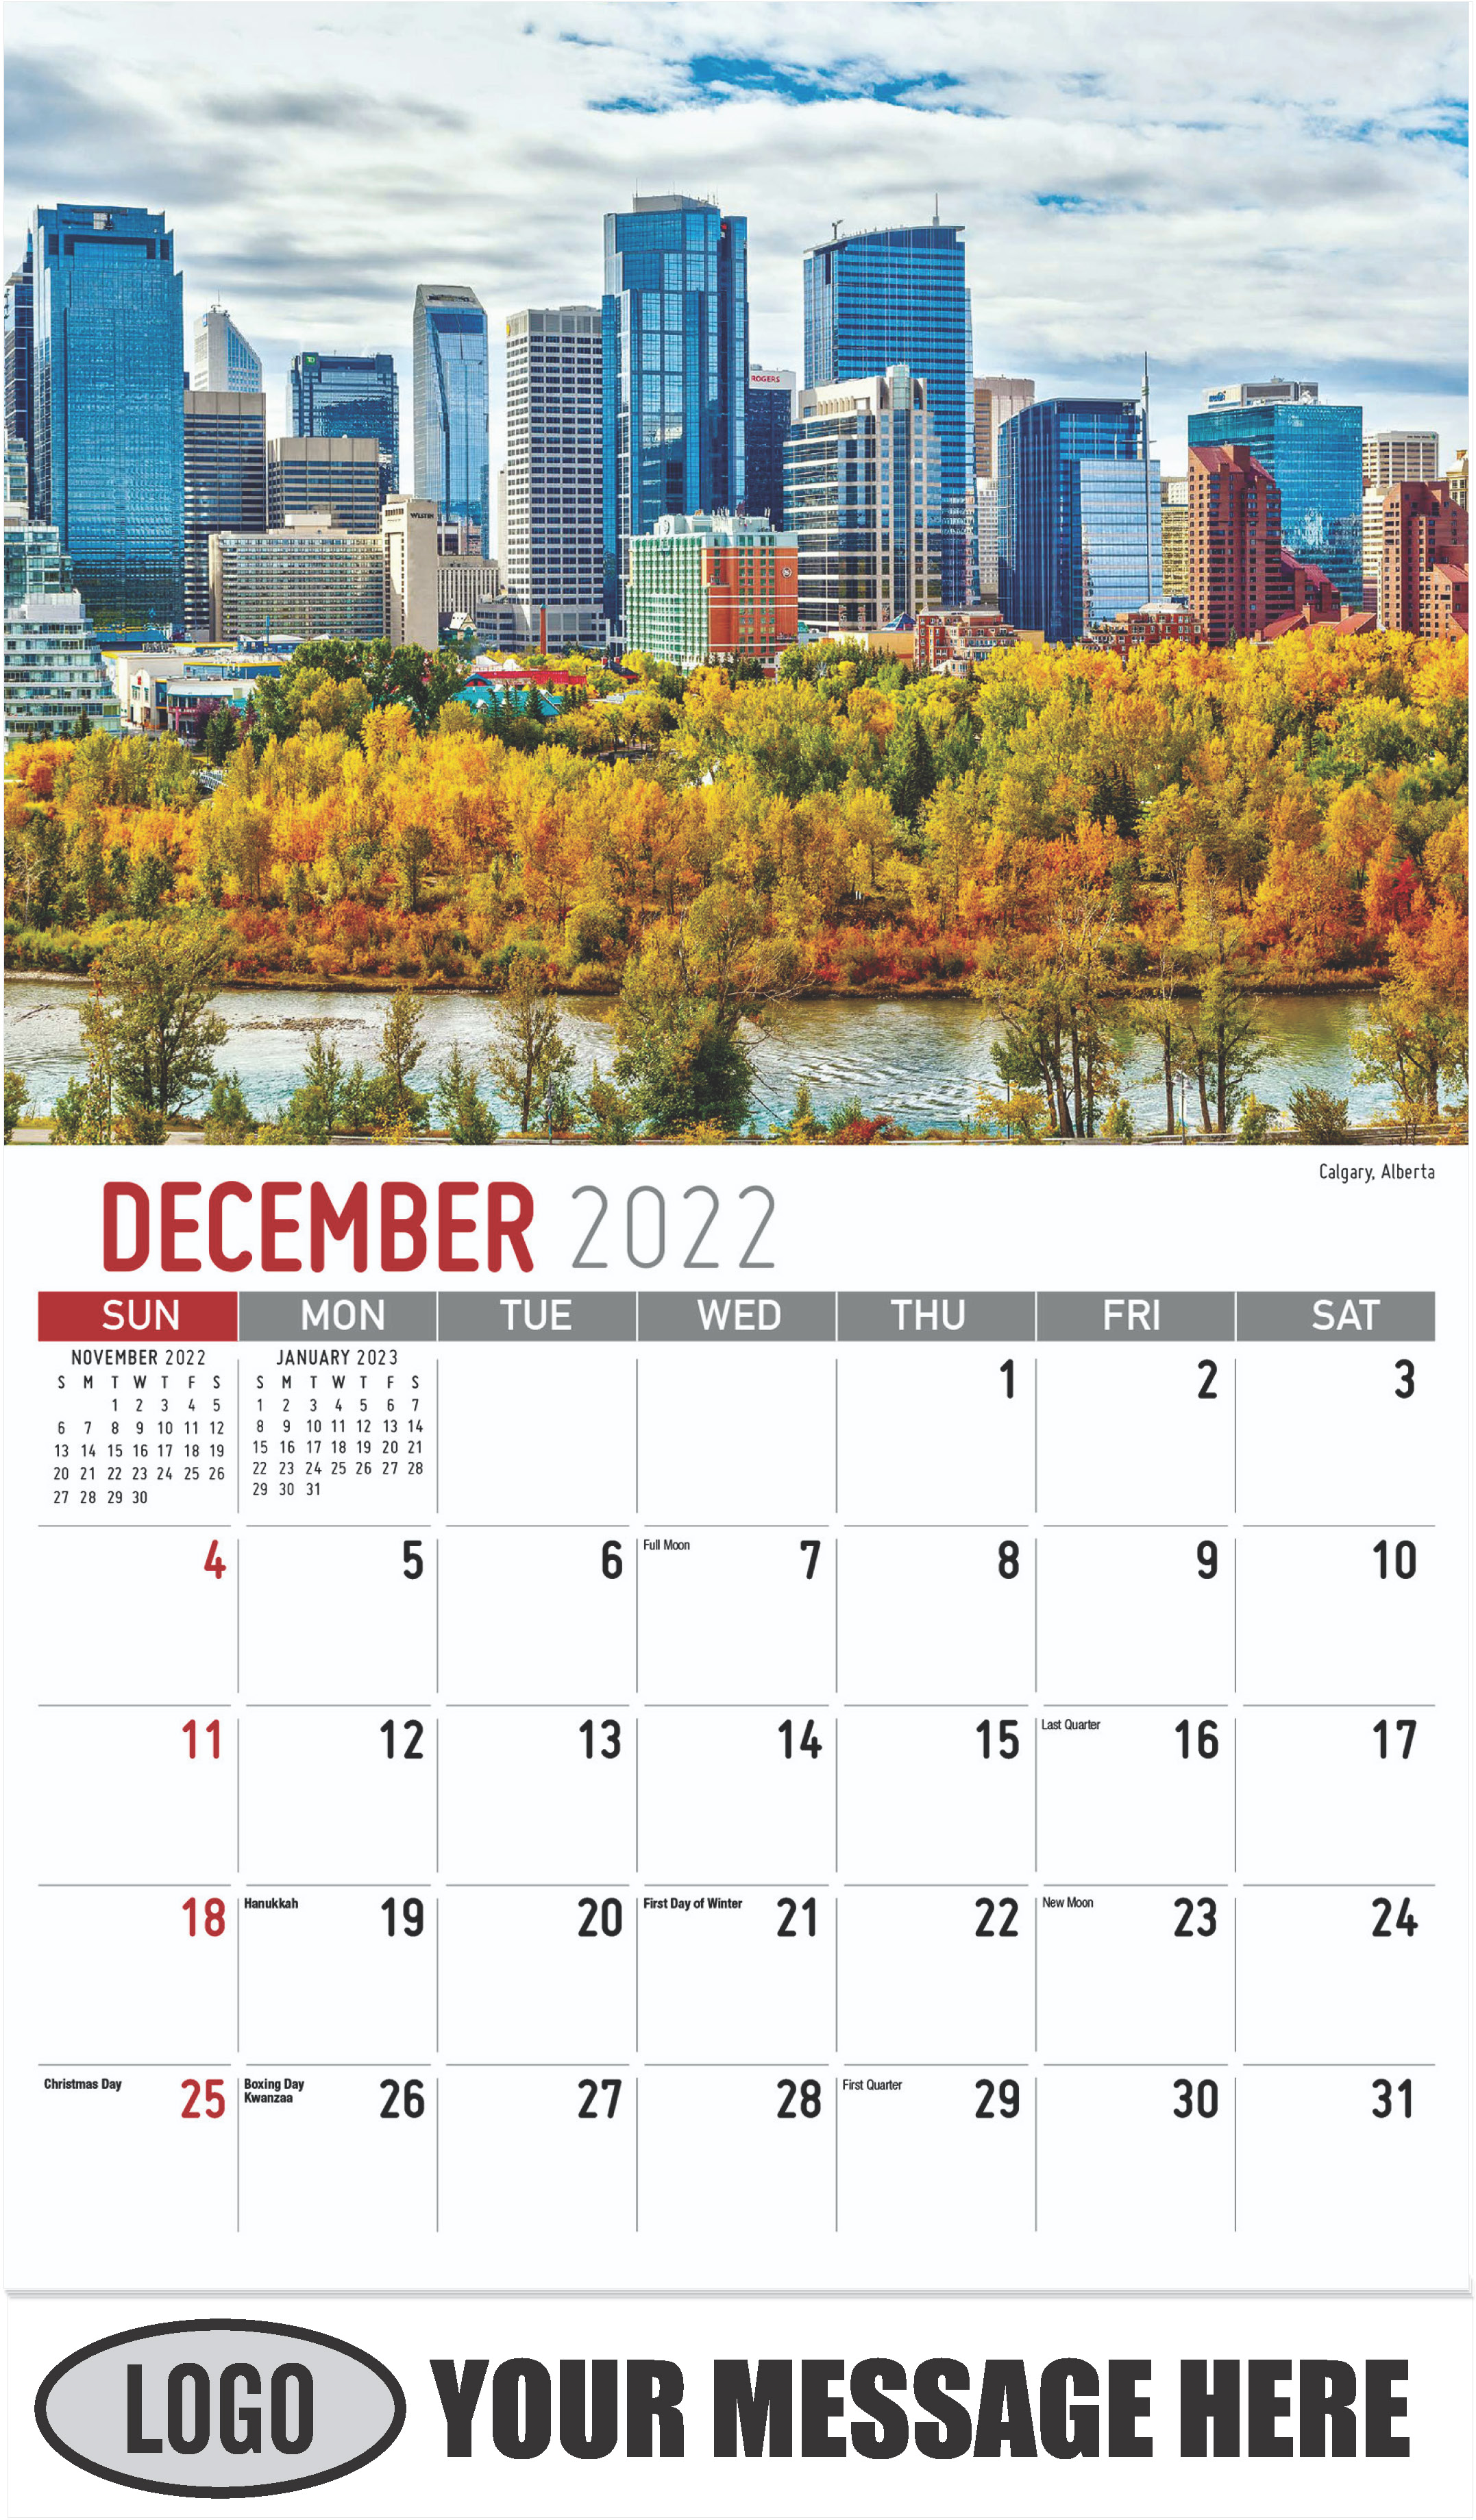 Calgary, Alberta - December 2022 - Scenes of Western Canada 2023 Promotional Calendar